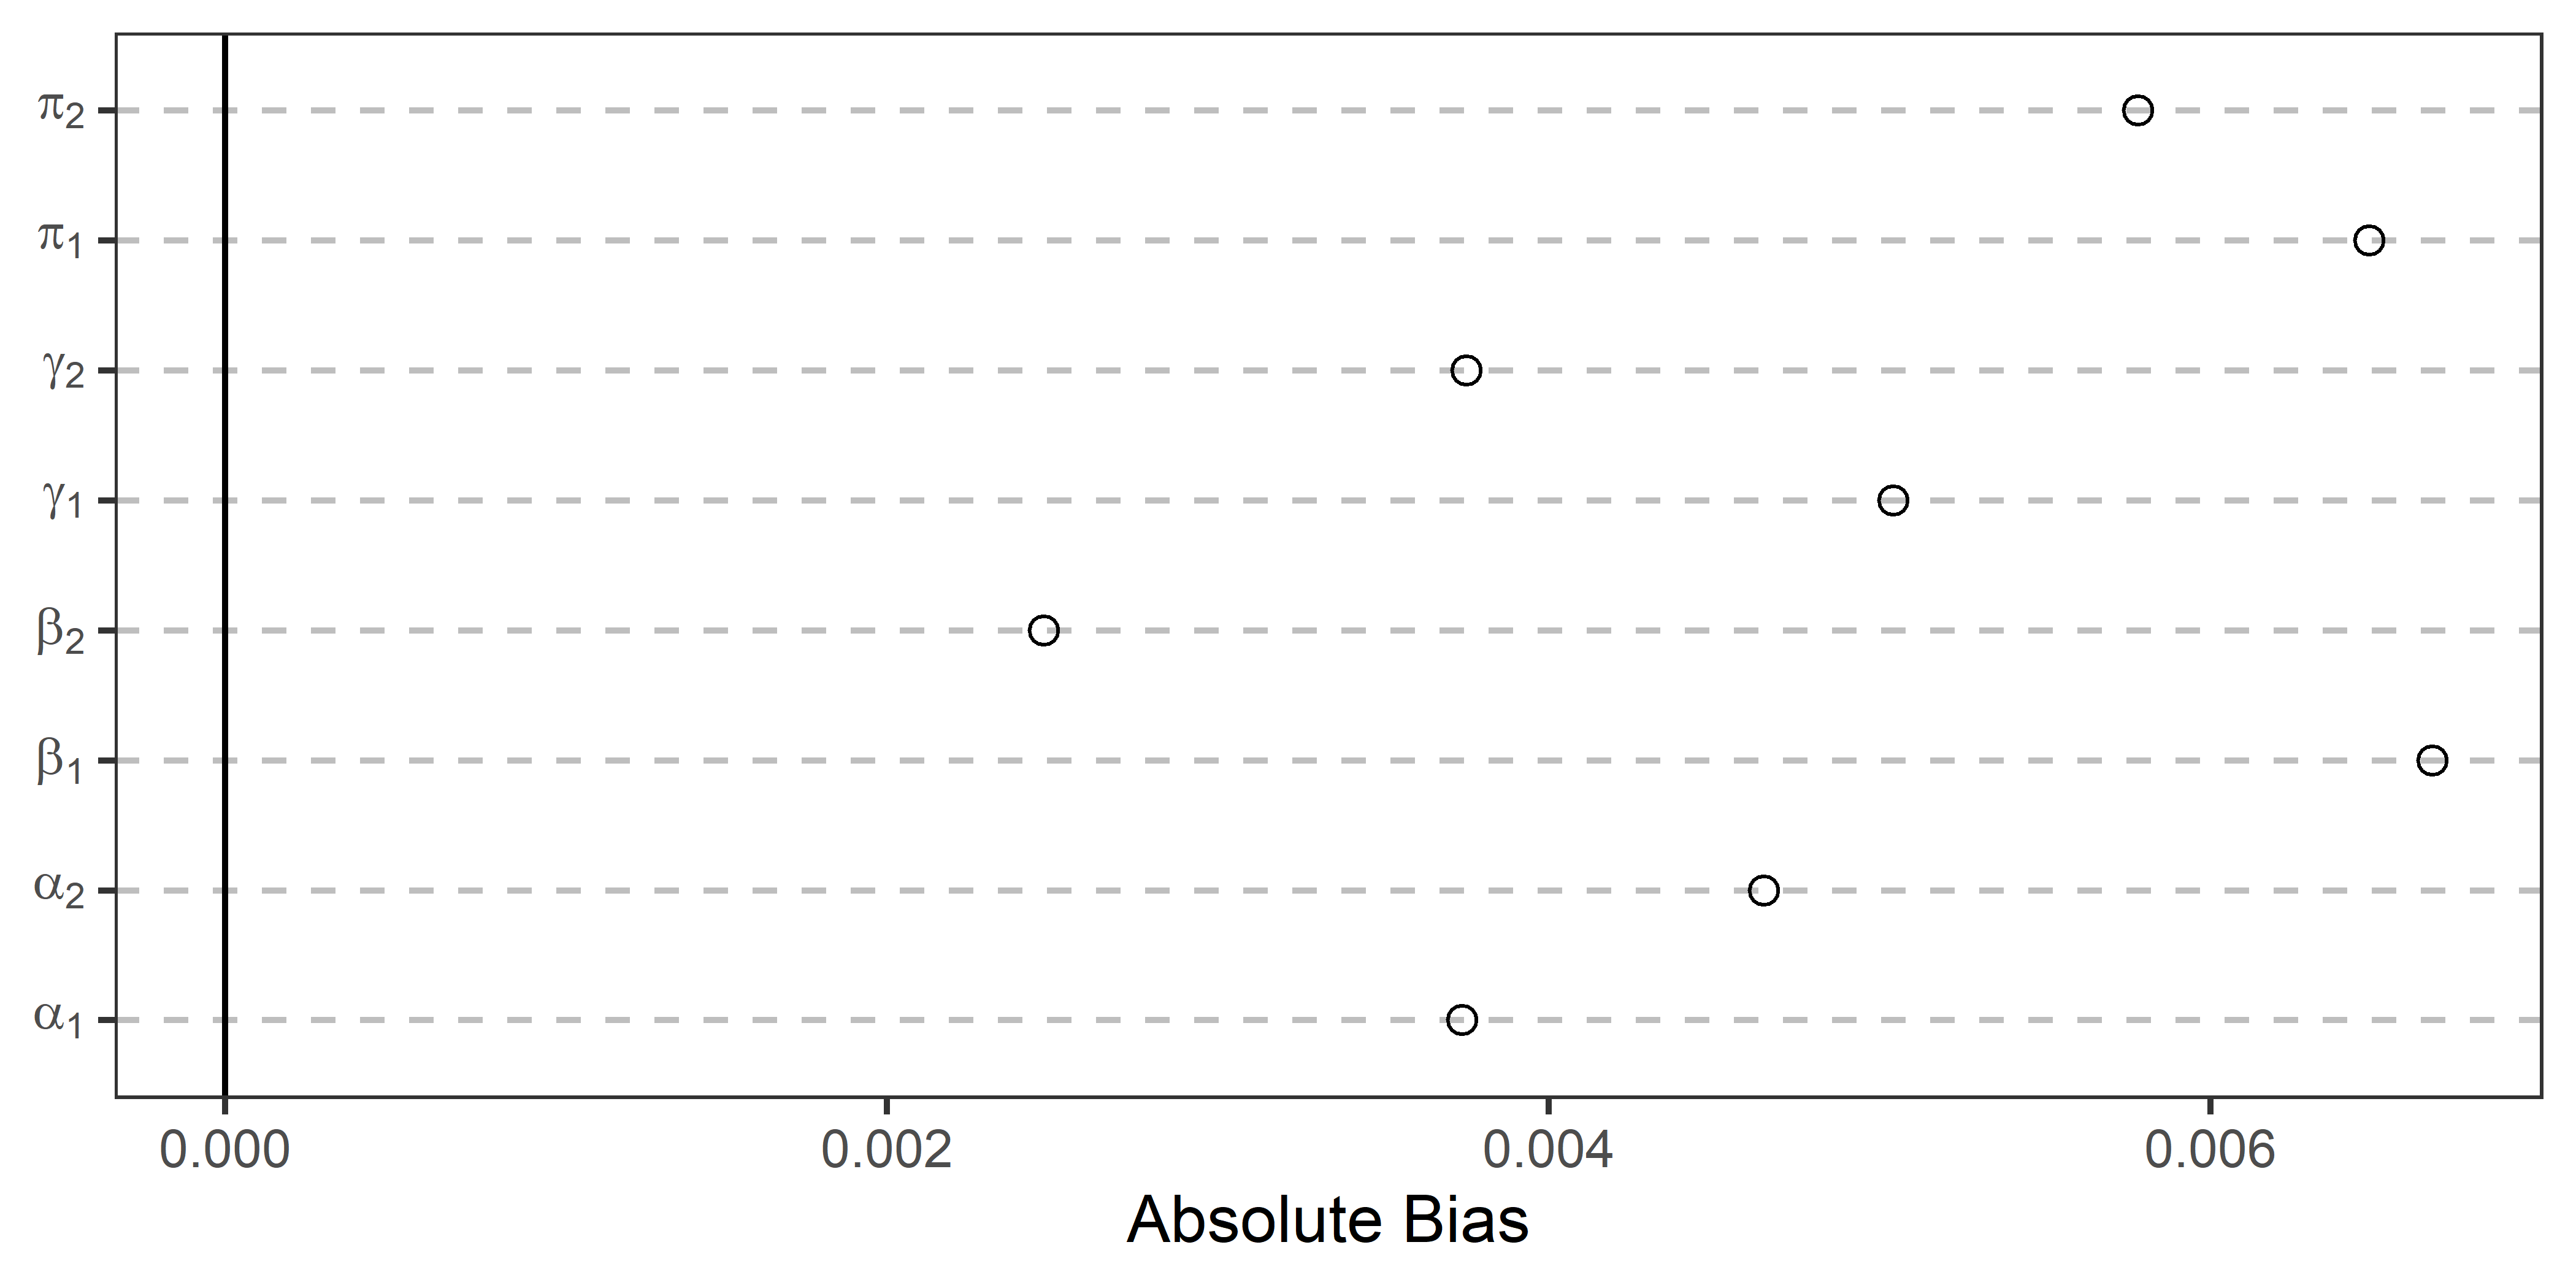 Average bias in TSLS versus reduced form
parameters.